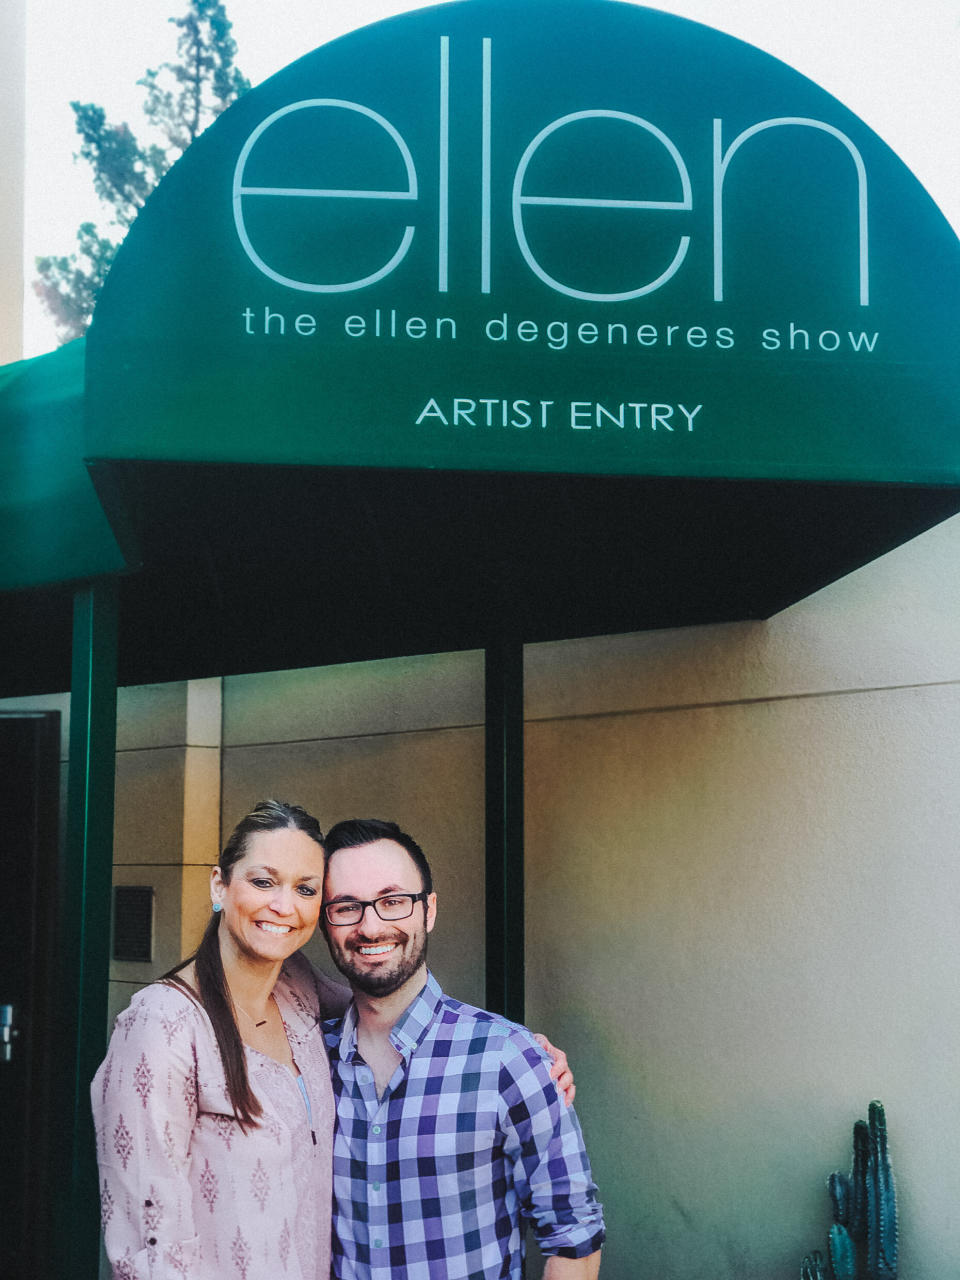 Bryden Giving and Michelle Messer outside "The Ellen DeGeneres Show." (Photo: Bryden Giving)